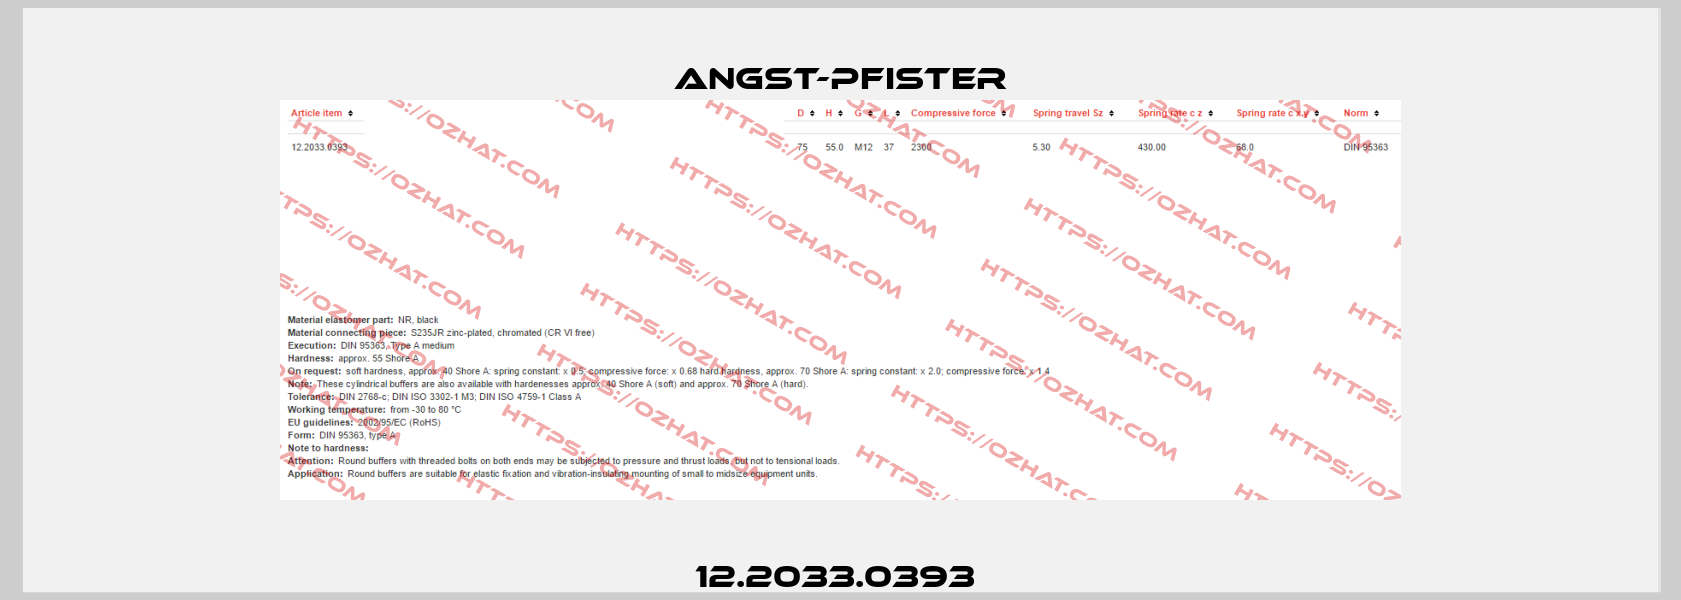 12.2033.0393  Angst-Pfister